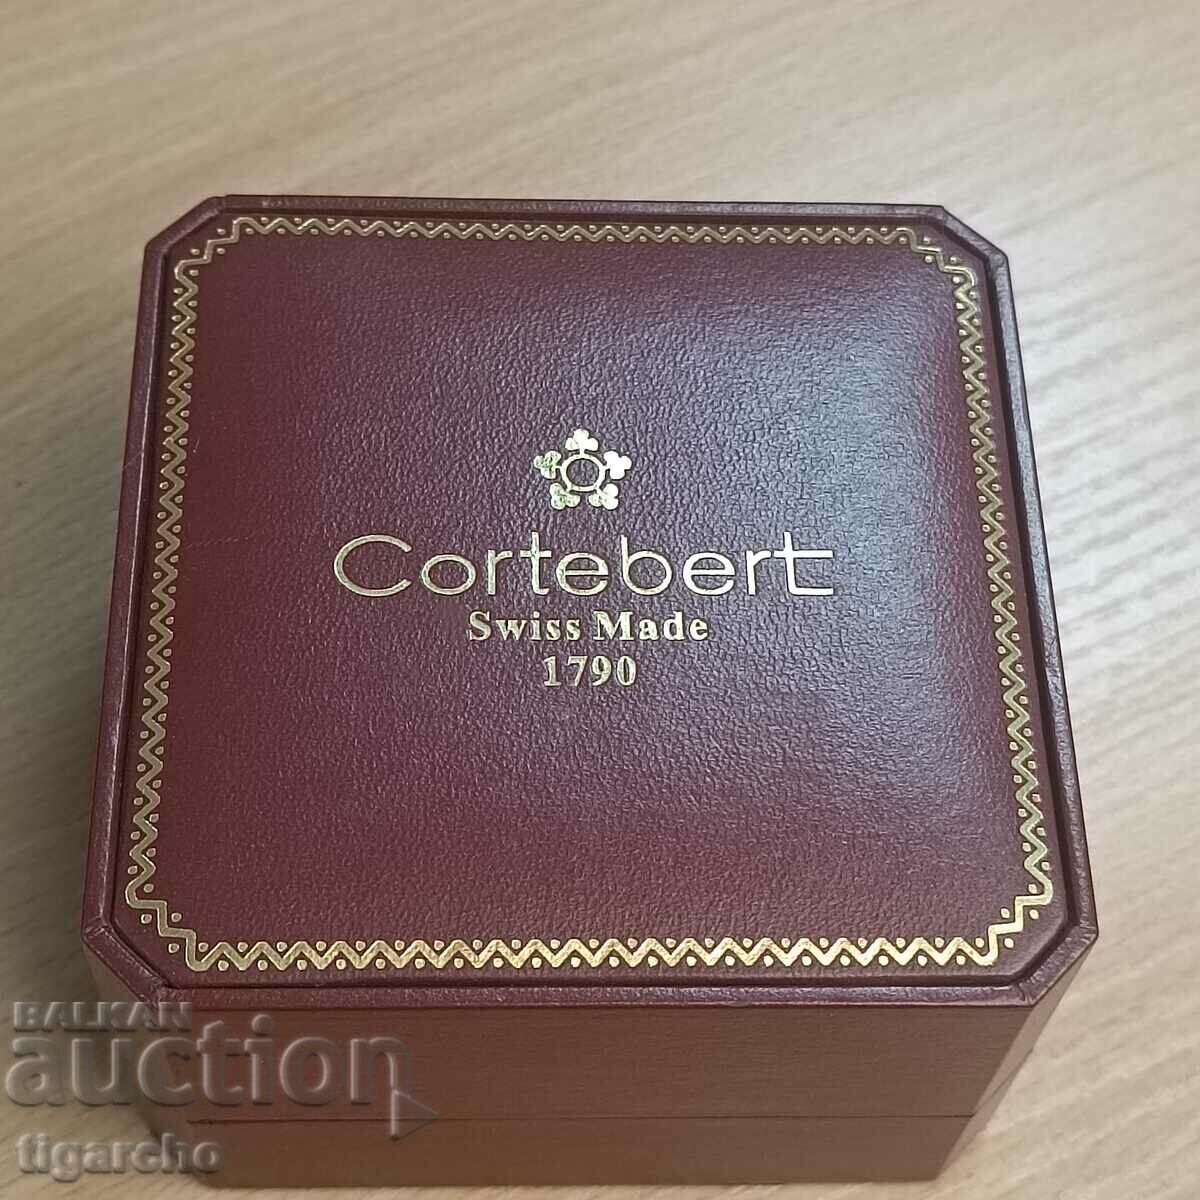 Cortebert watch box